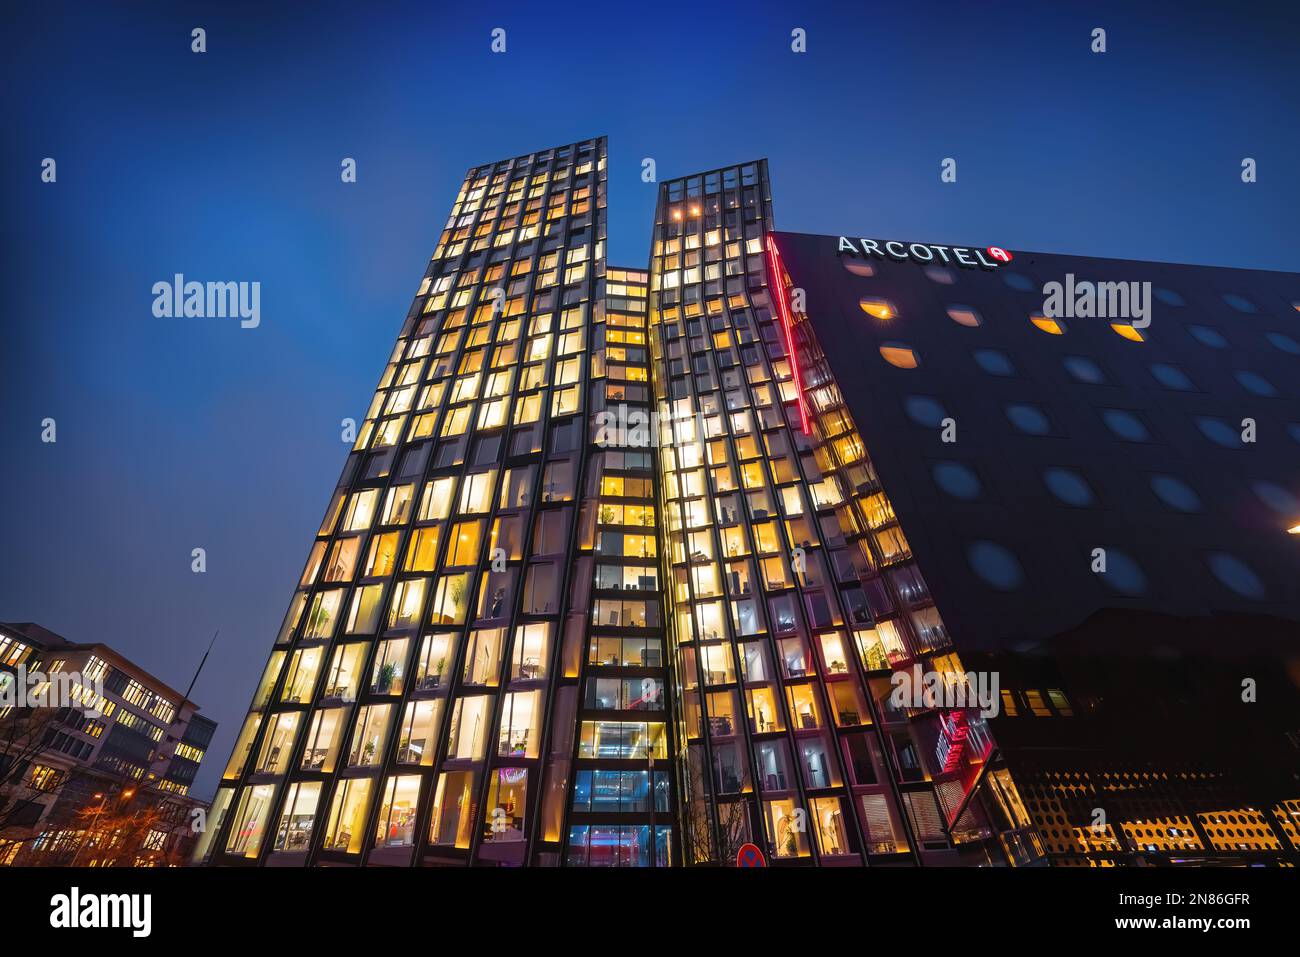 Dancing Towers e Arcotel a St Quartiere Pauli di notte - Amburgo, Germania Foto Stock